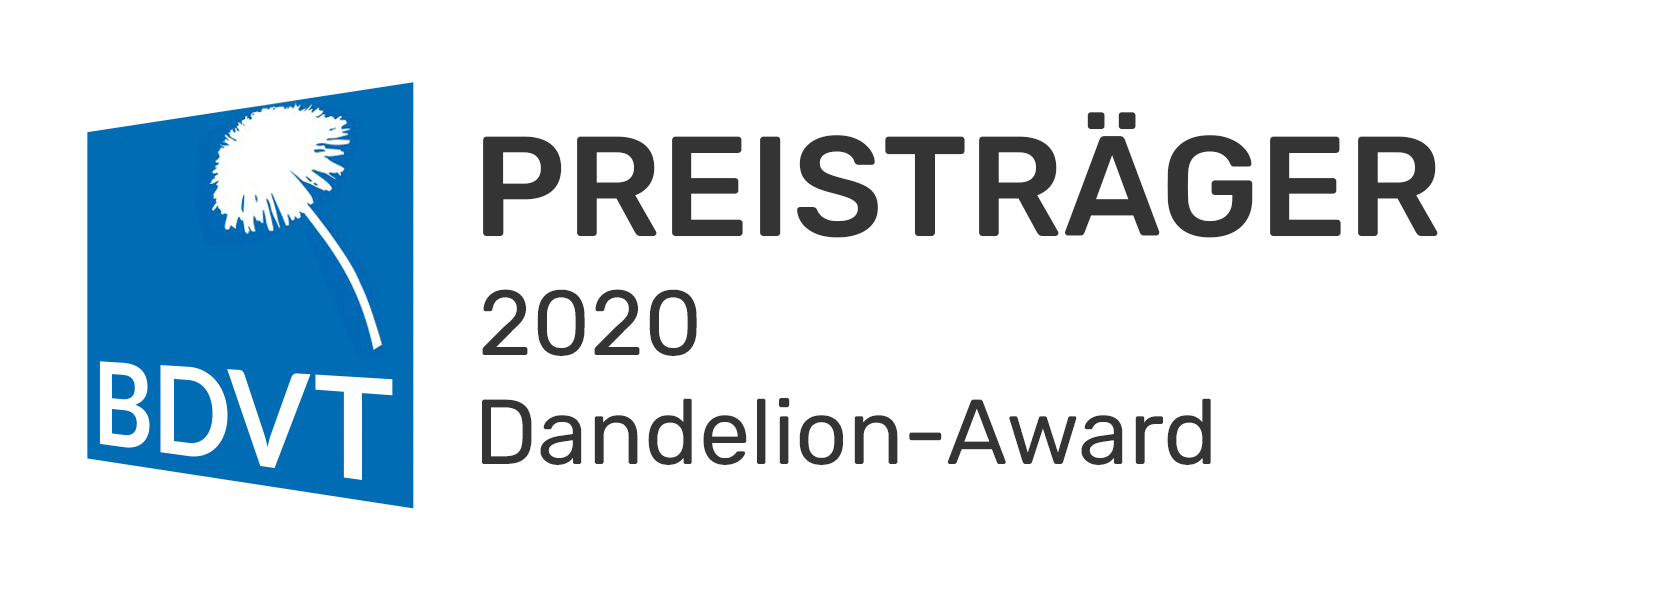 Preisträger 2020 Dandelion-Award